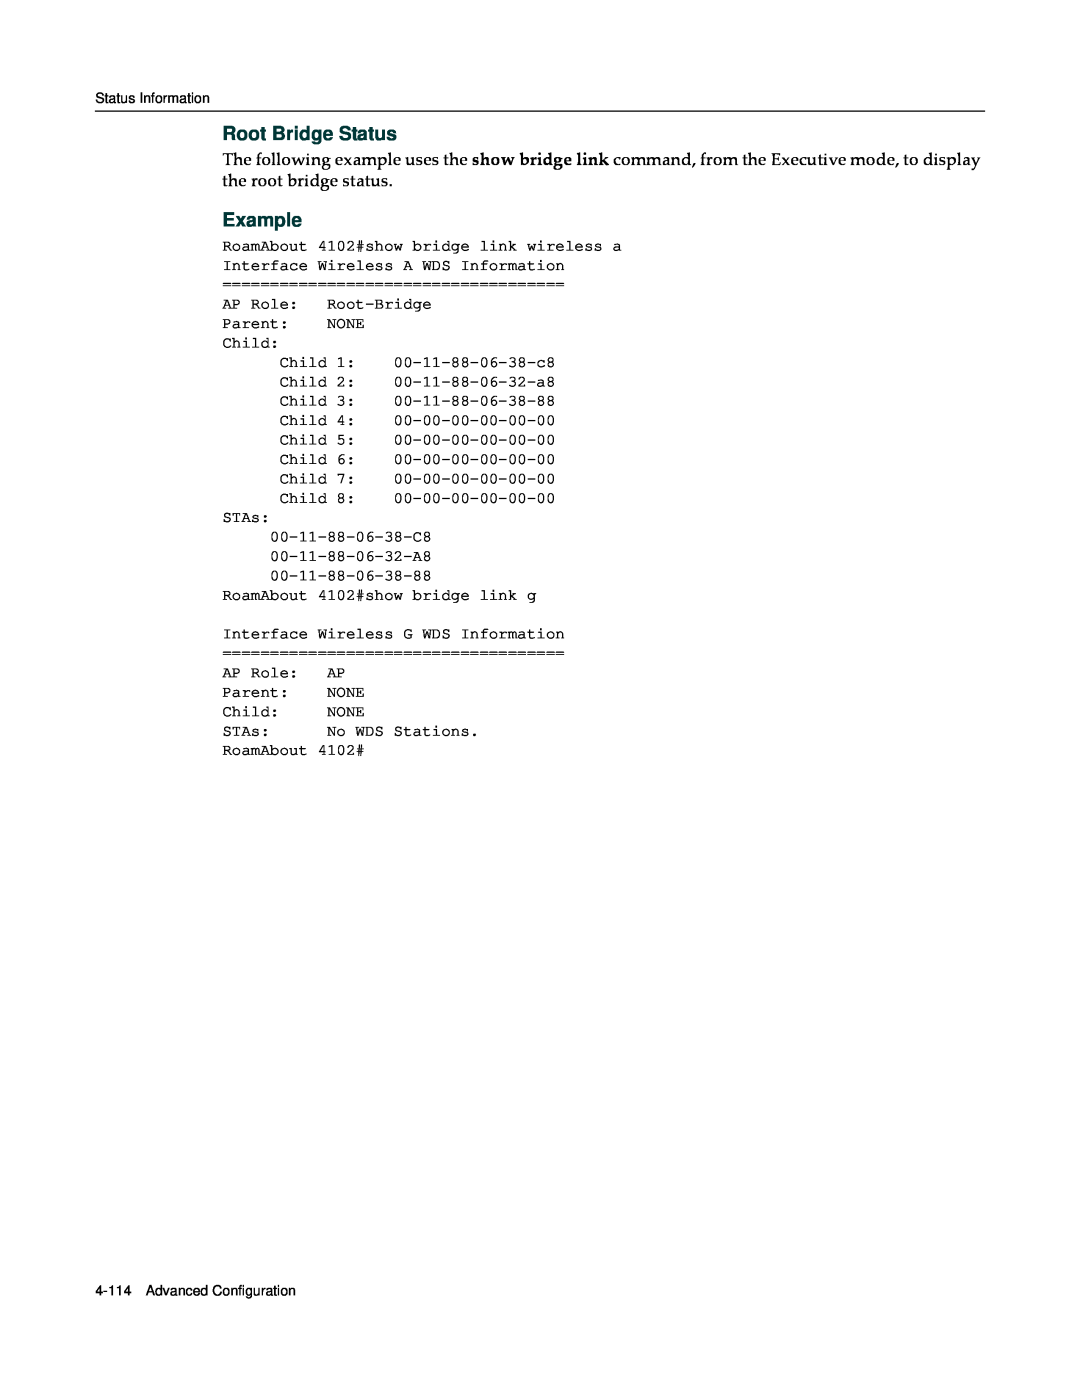 Enterasys Networks RBT-4102 manual Root Bridge Status, Example 